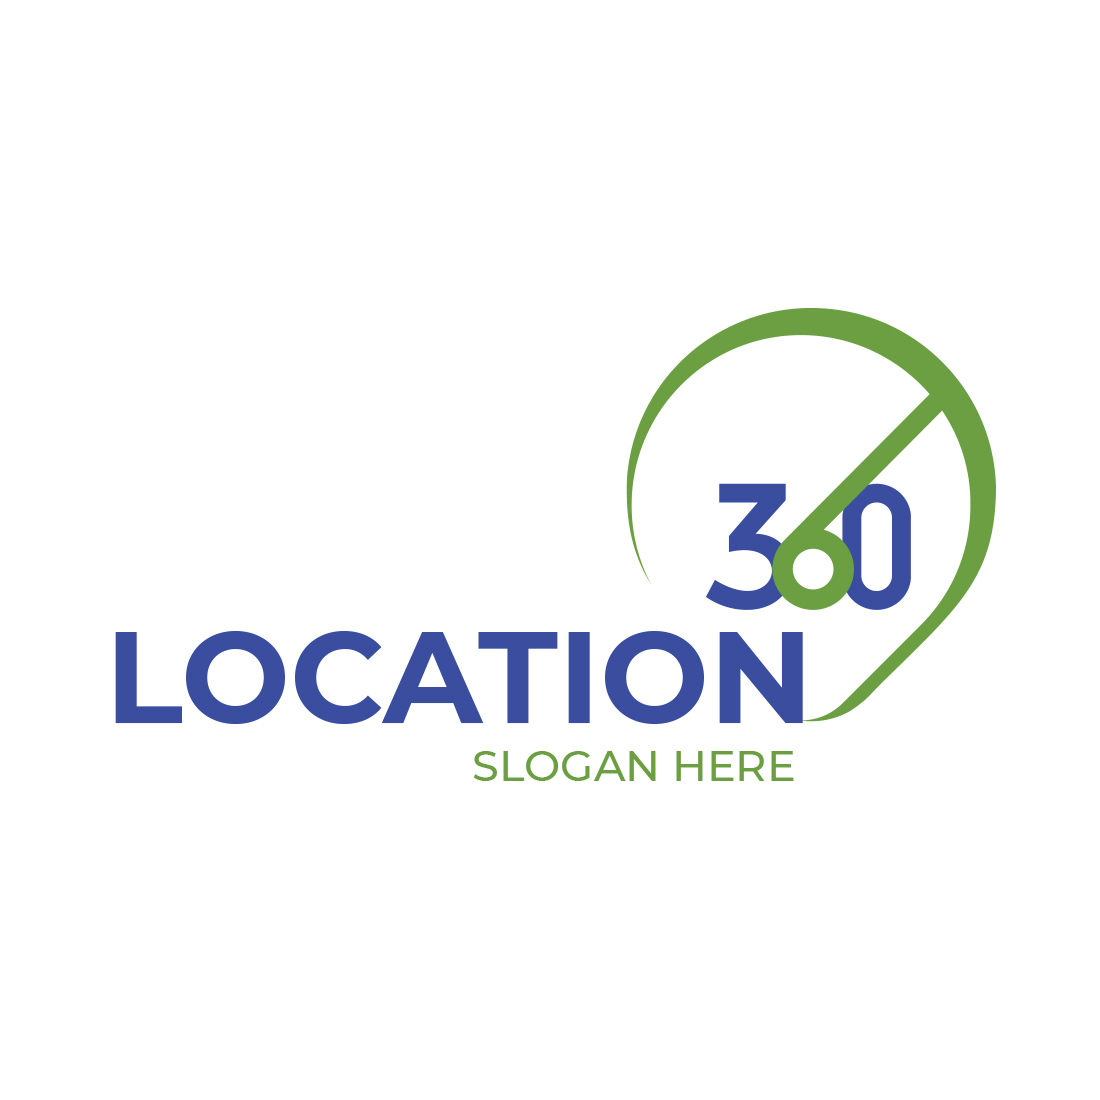 Location 360 logo design preview image.